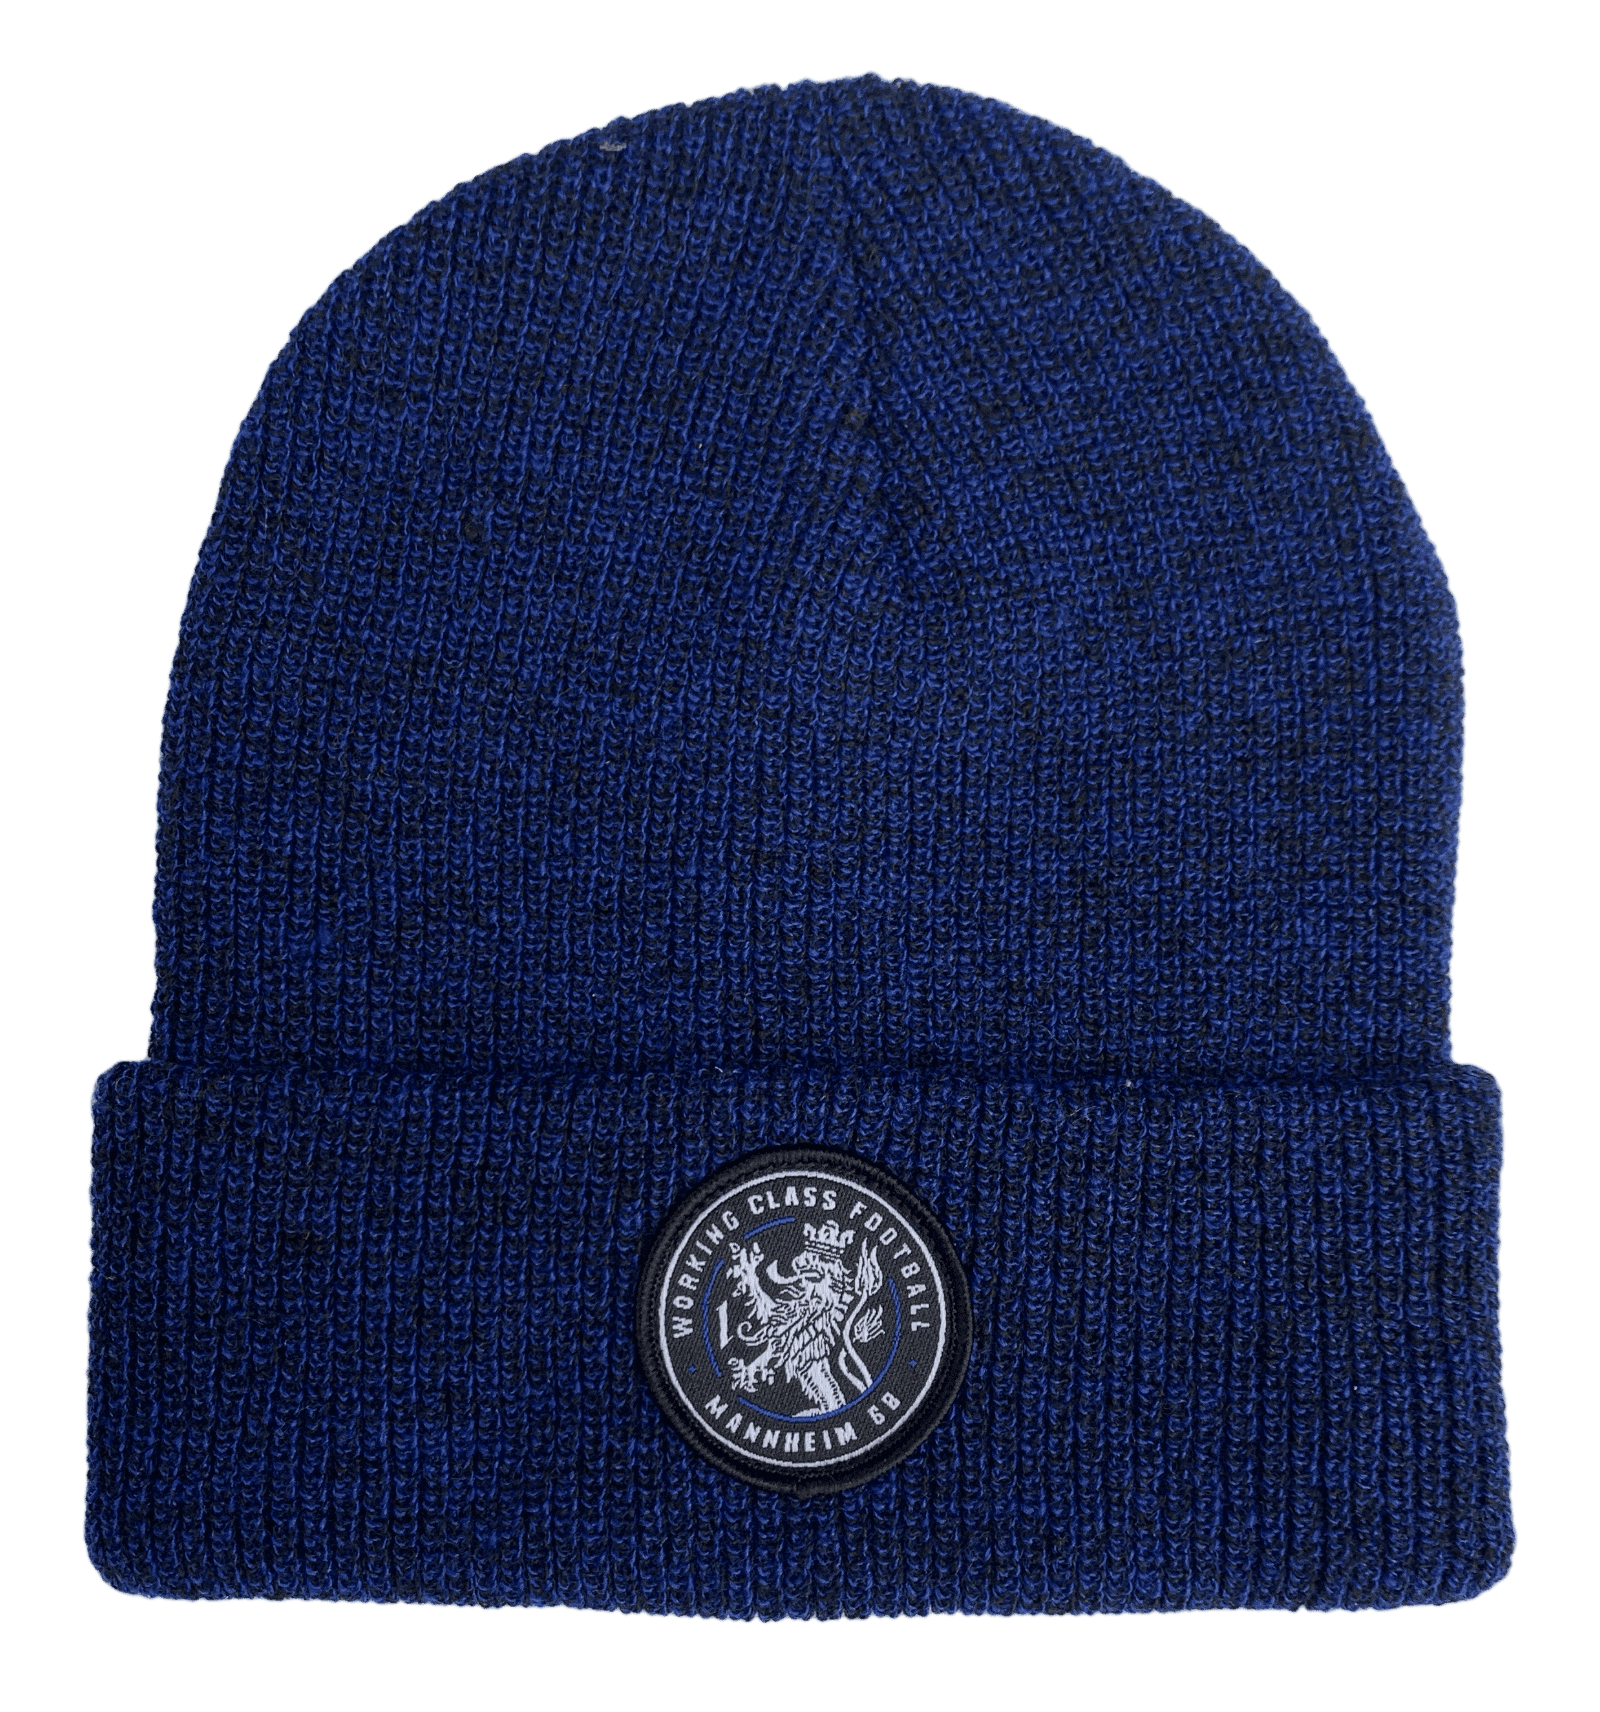 Mütze - Working blau